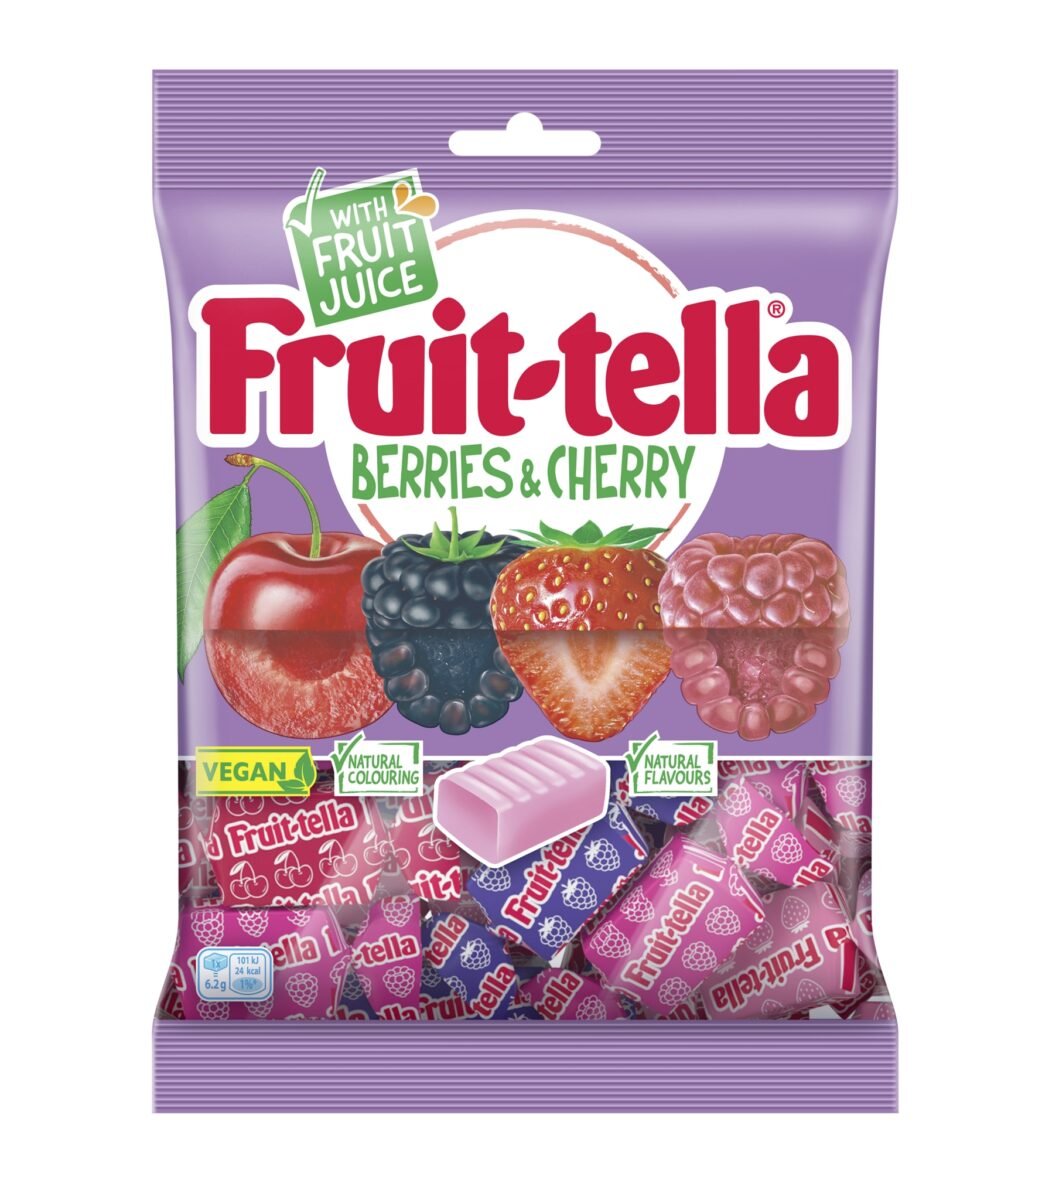 Vegan Fruit-tella Berries & Cherry